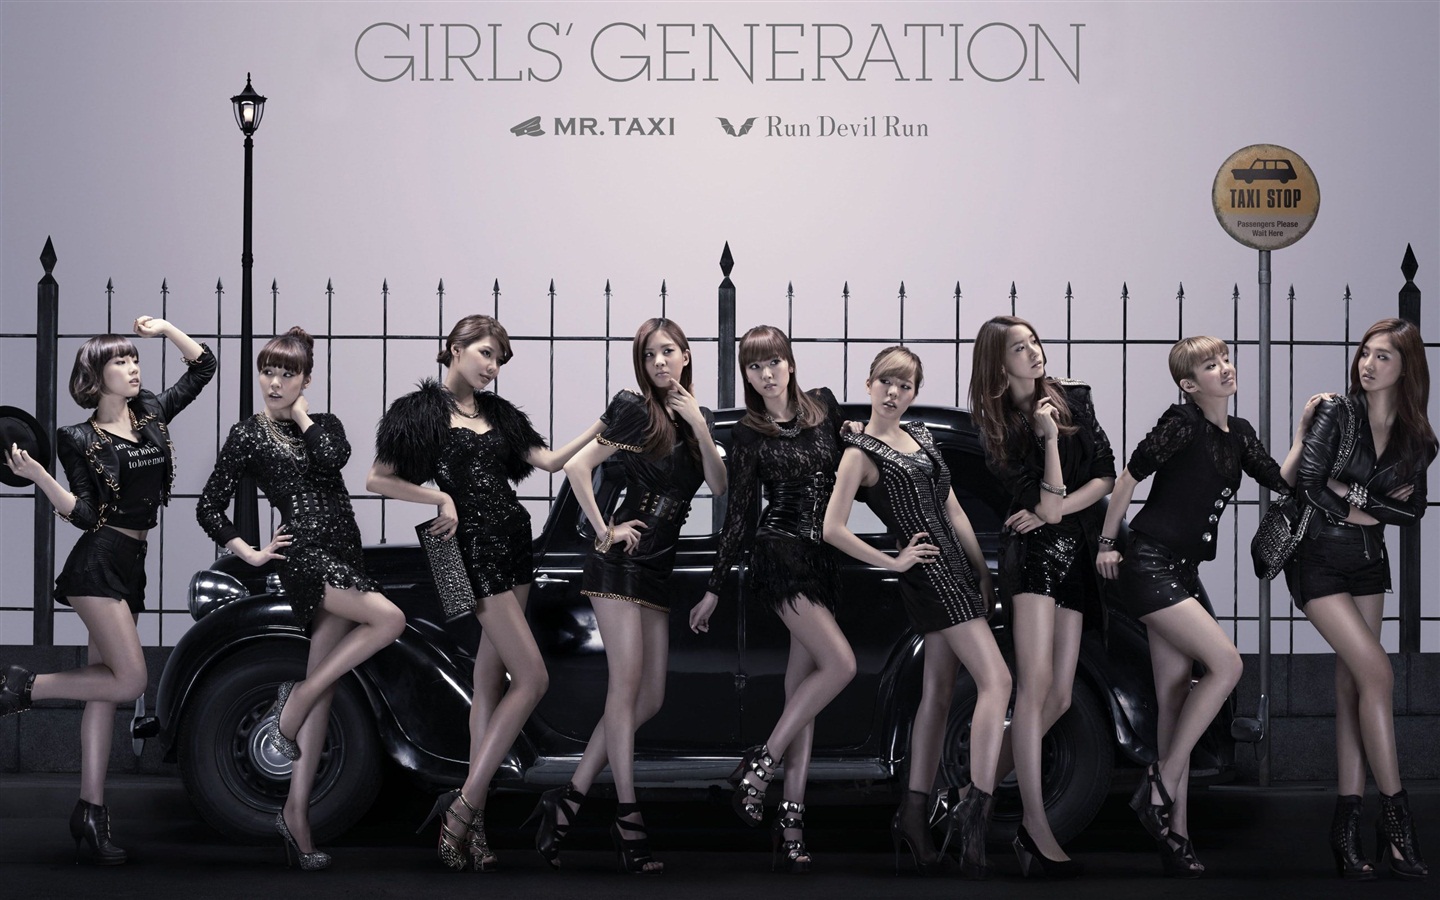 Generación último Girls HD Wallpapers Collection #14 - 1440x900